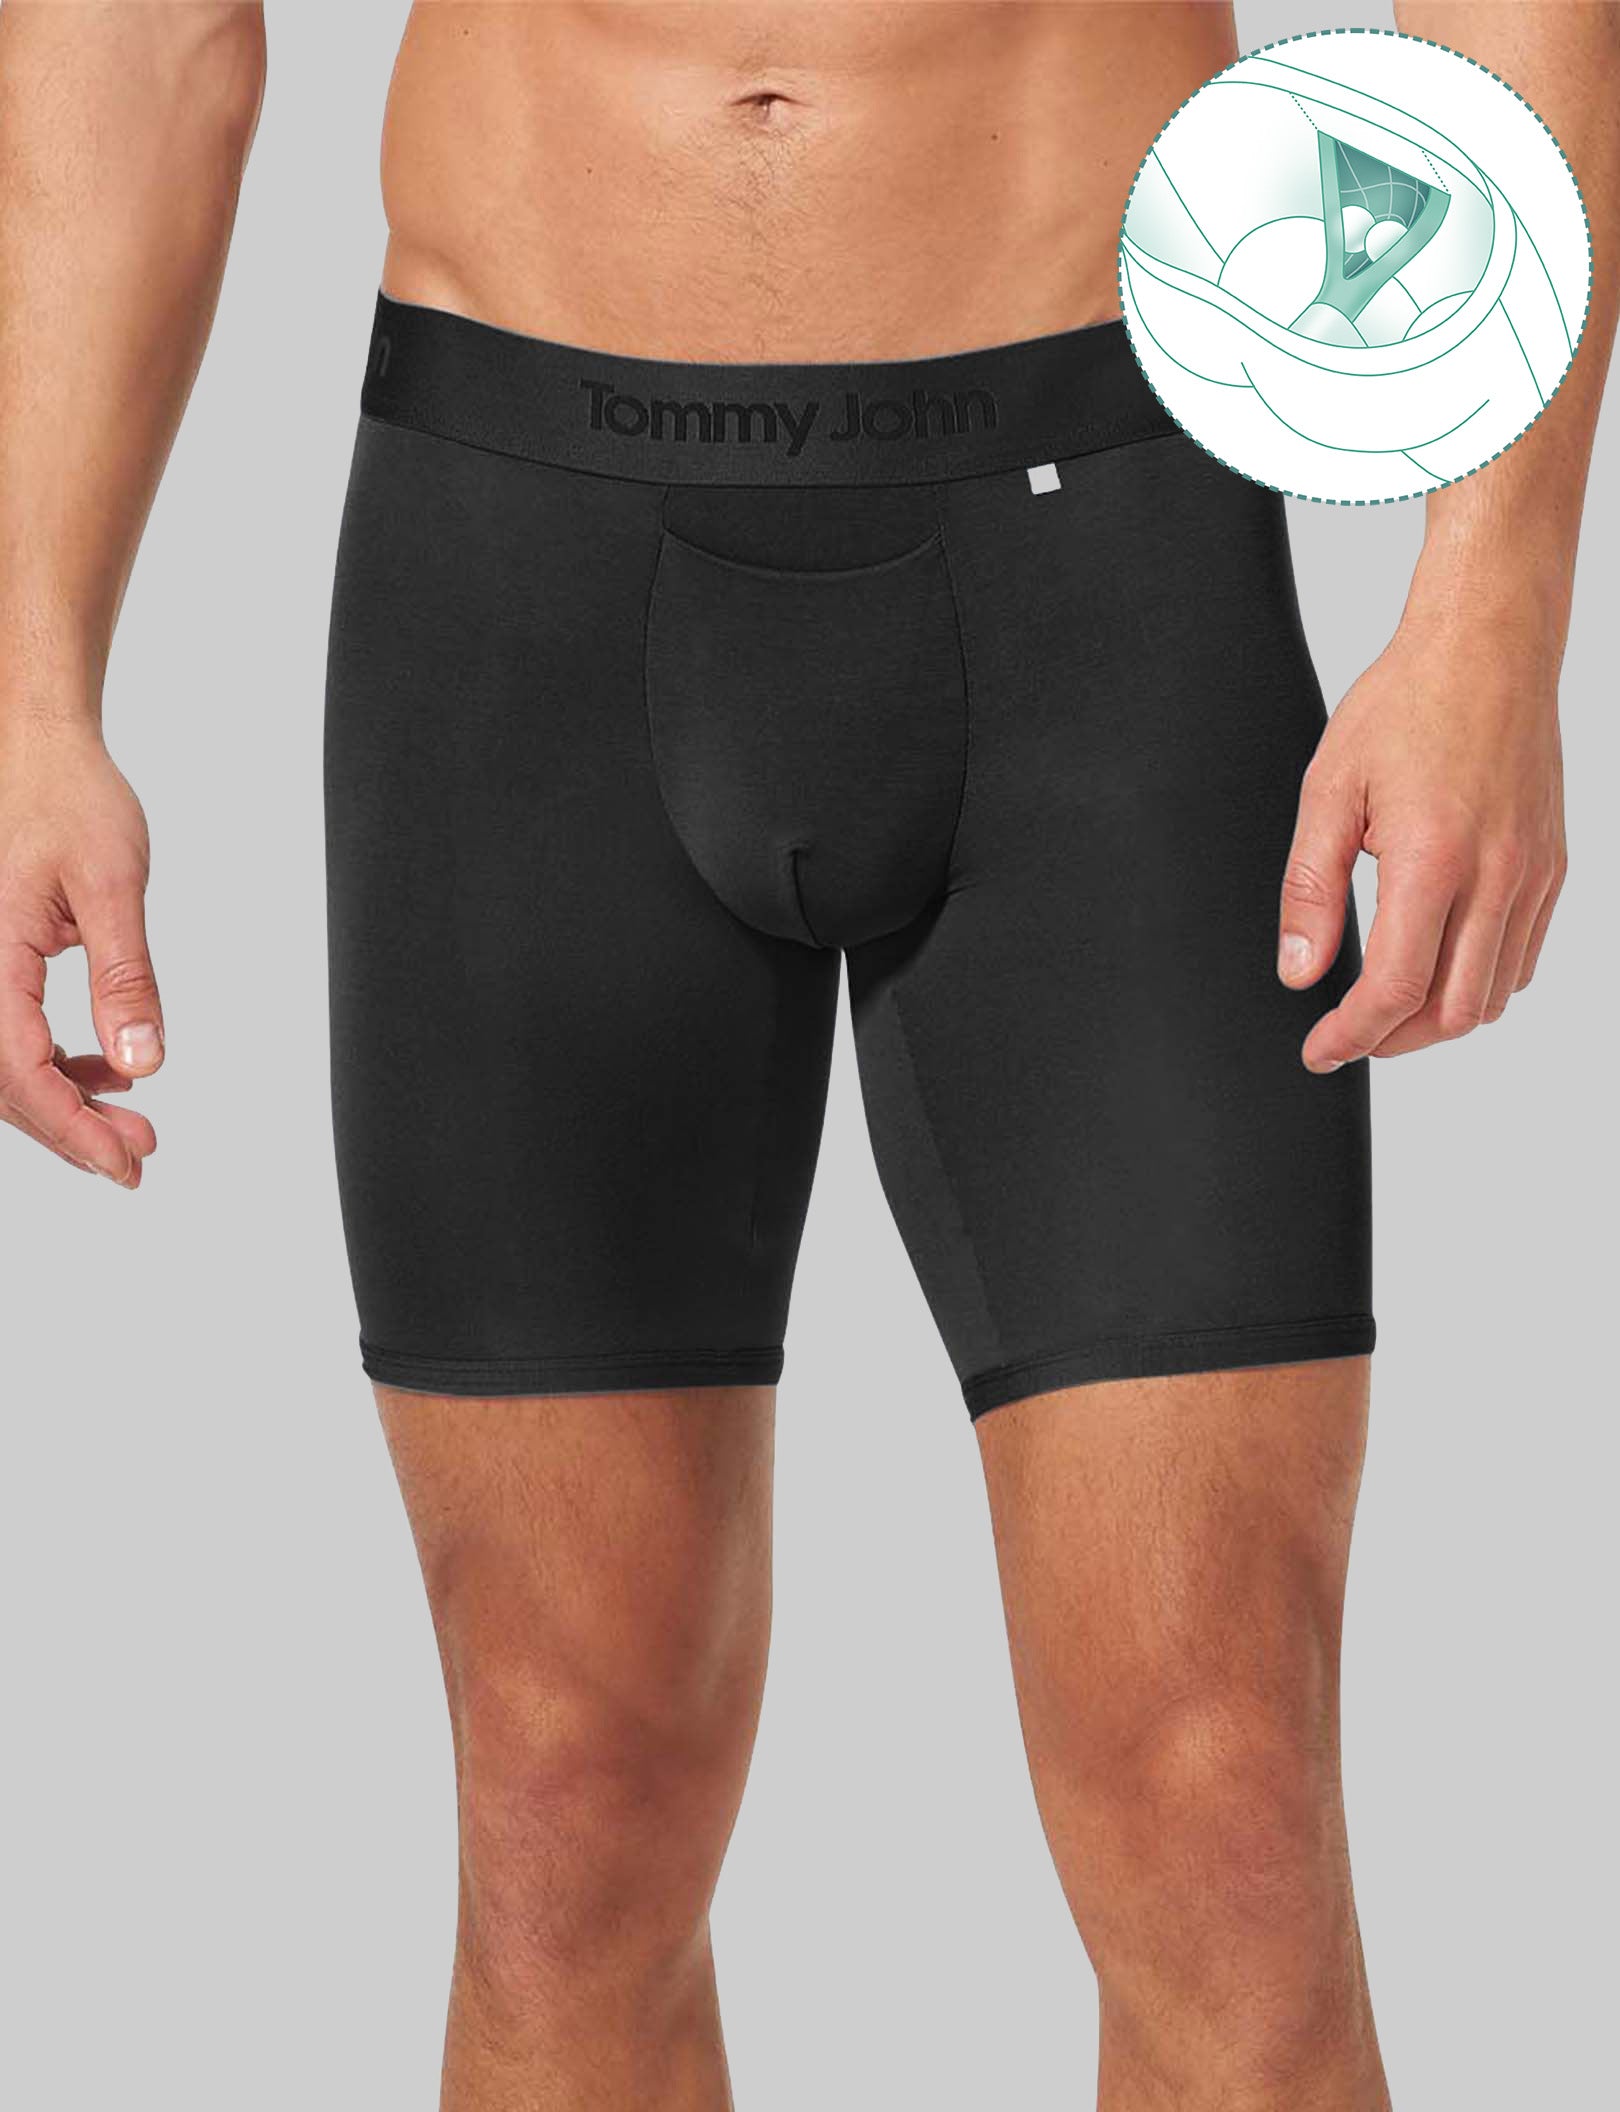 Men's Briefs Underwear With Front Hole Open Pouch